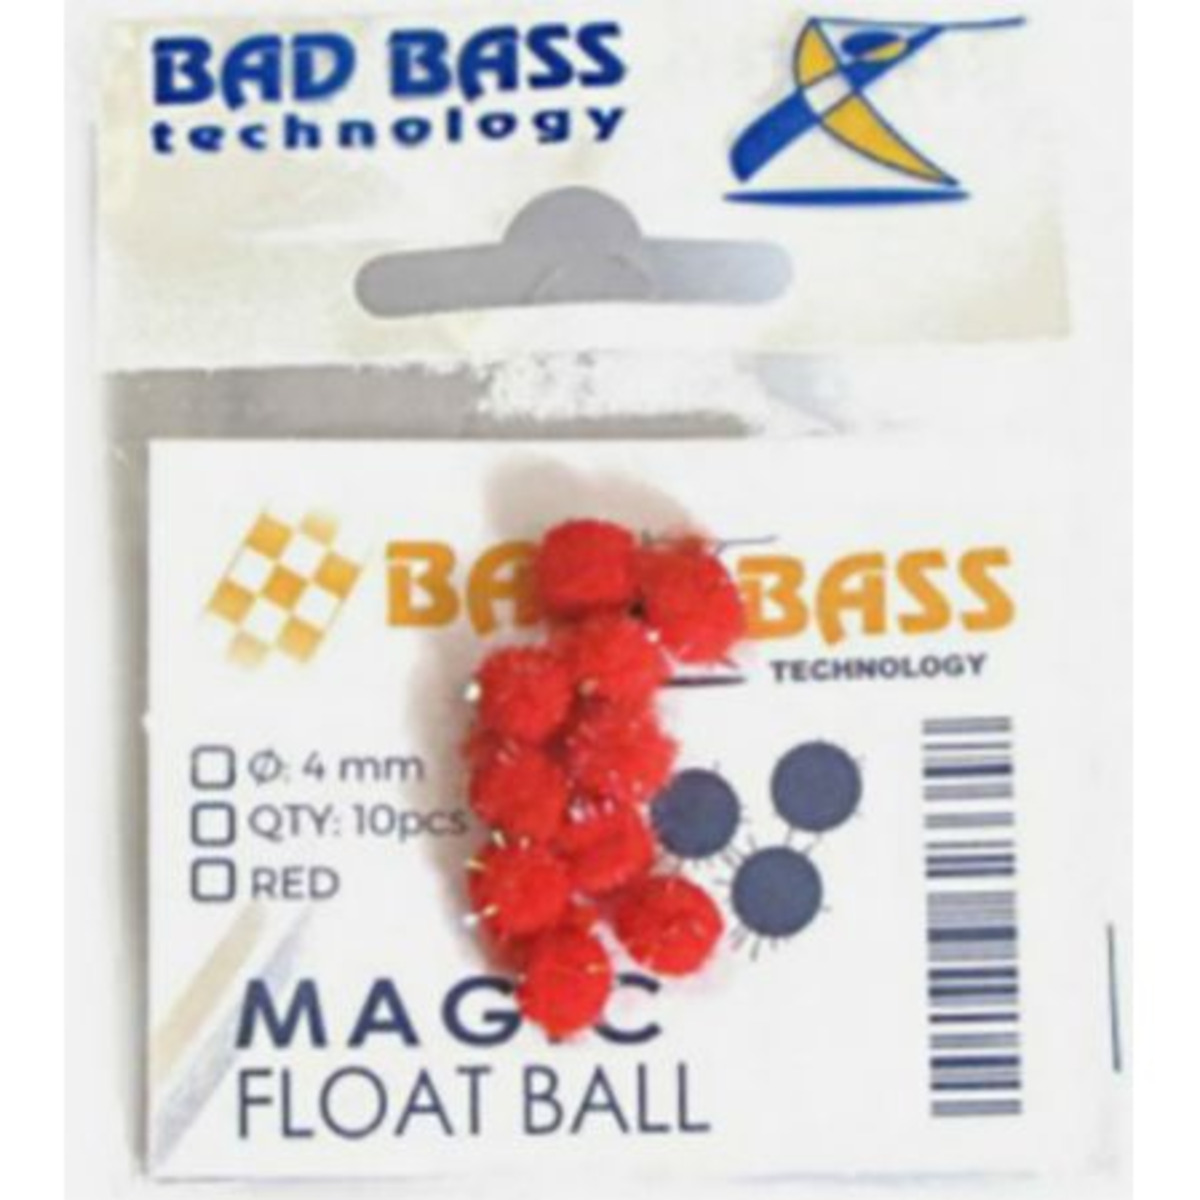 Bad Bass Magic Float Ball - 6 mm - Red